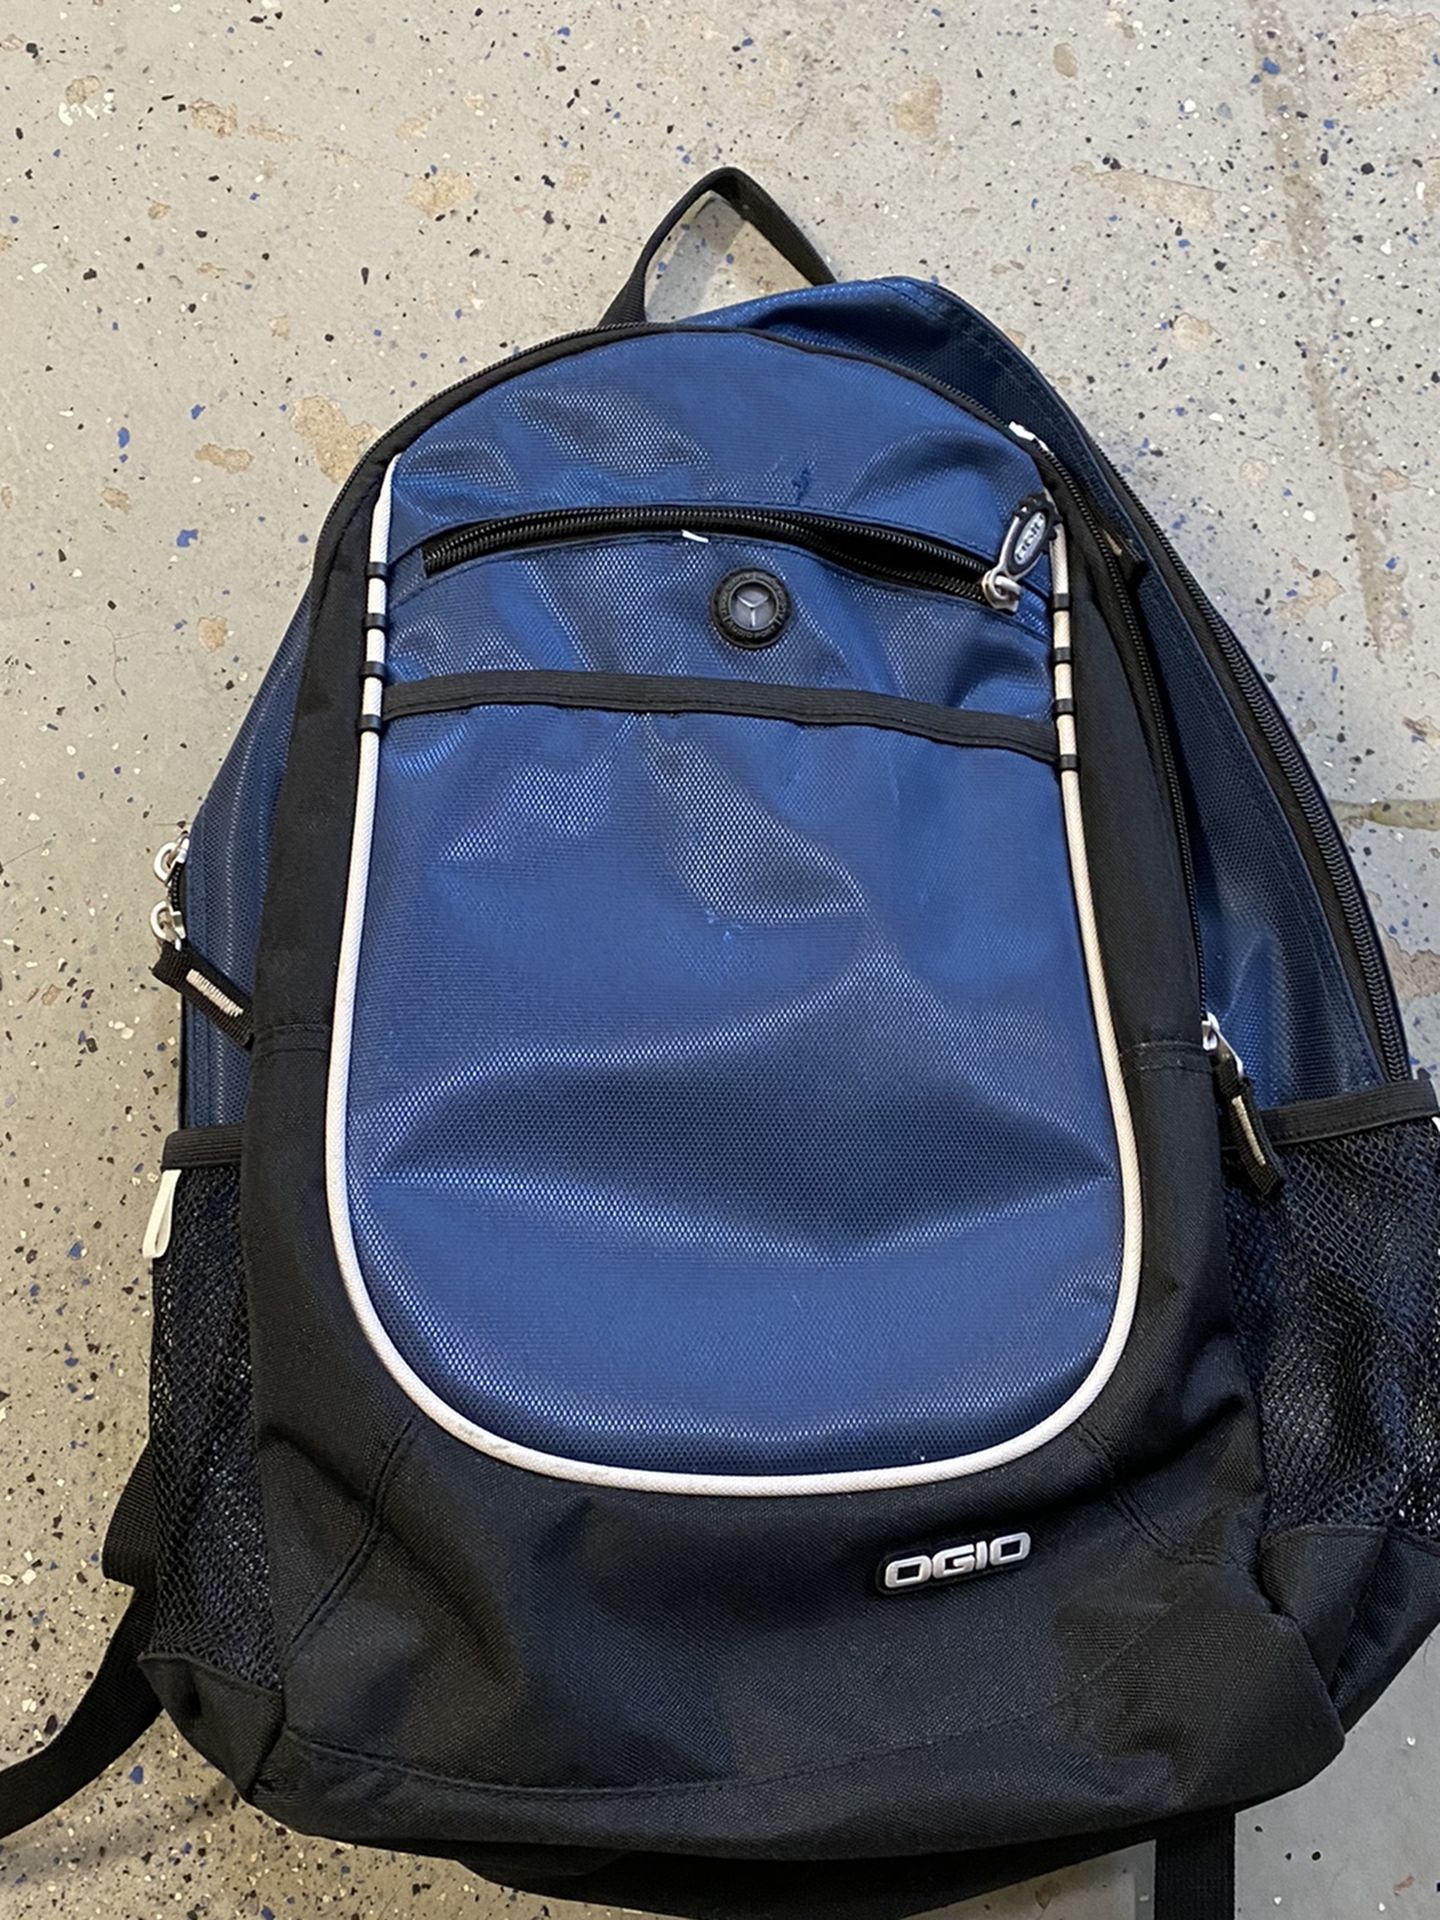 Ogio Backpack New